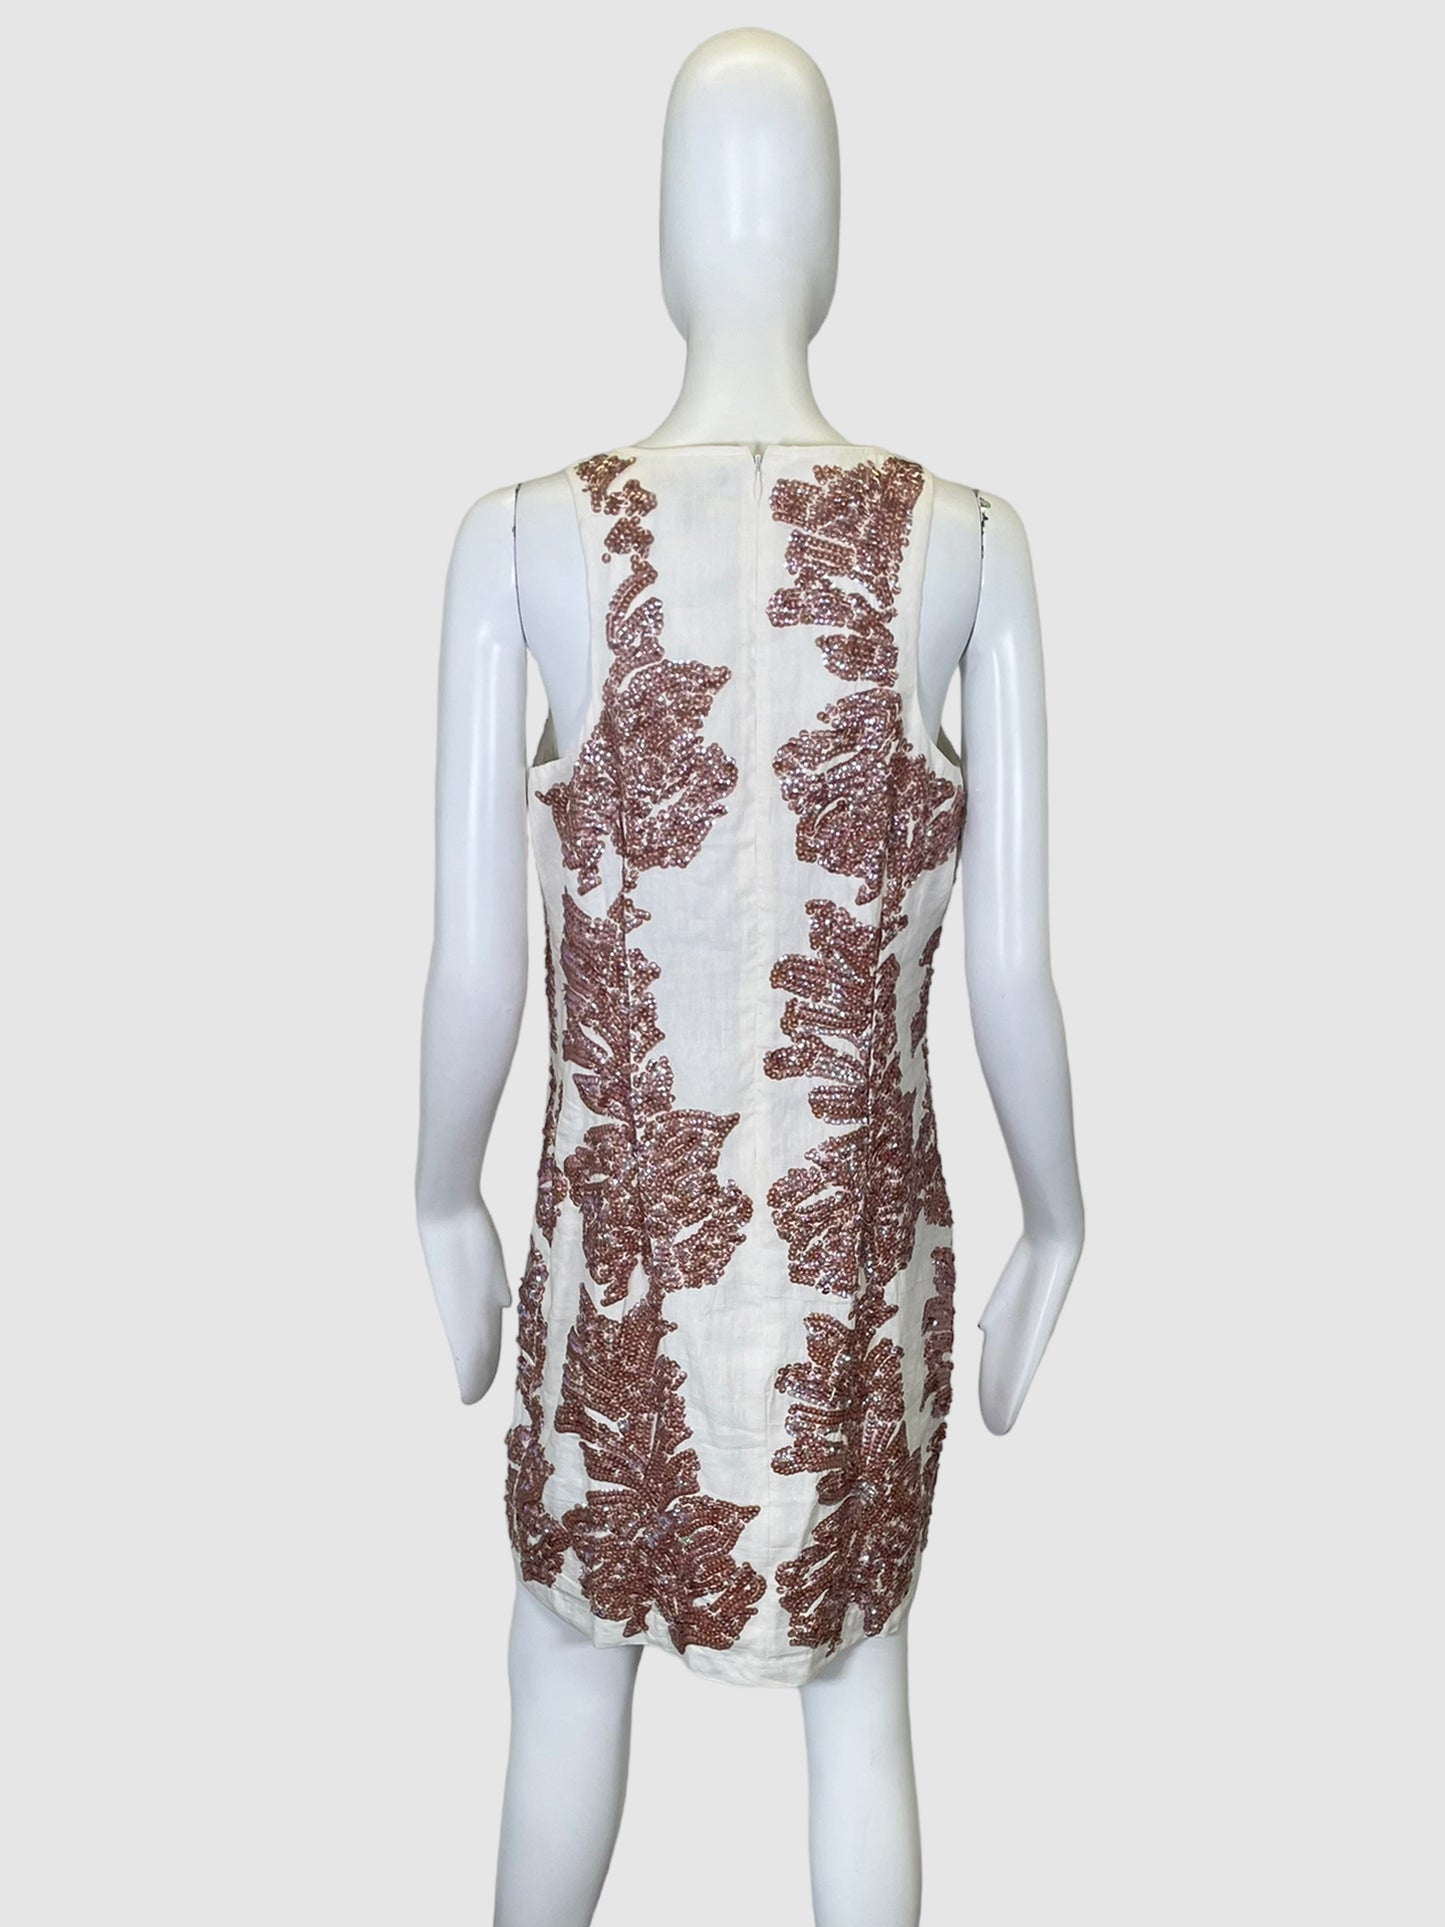 J Crew Sleeveless Sequin Embroidery Dress - Size 6